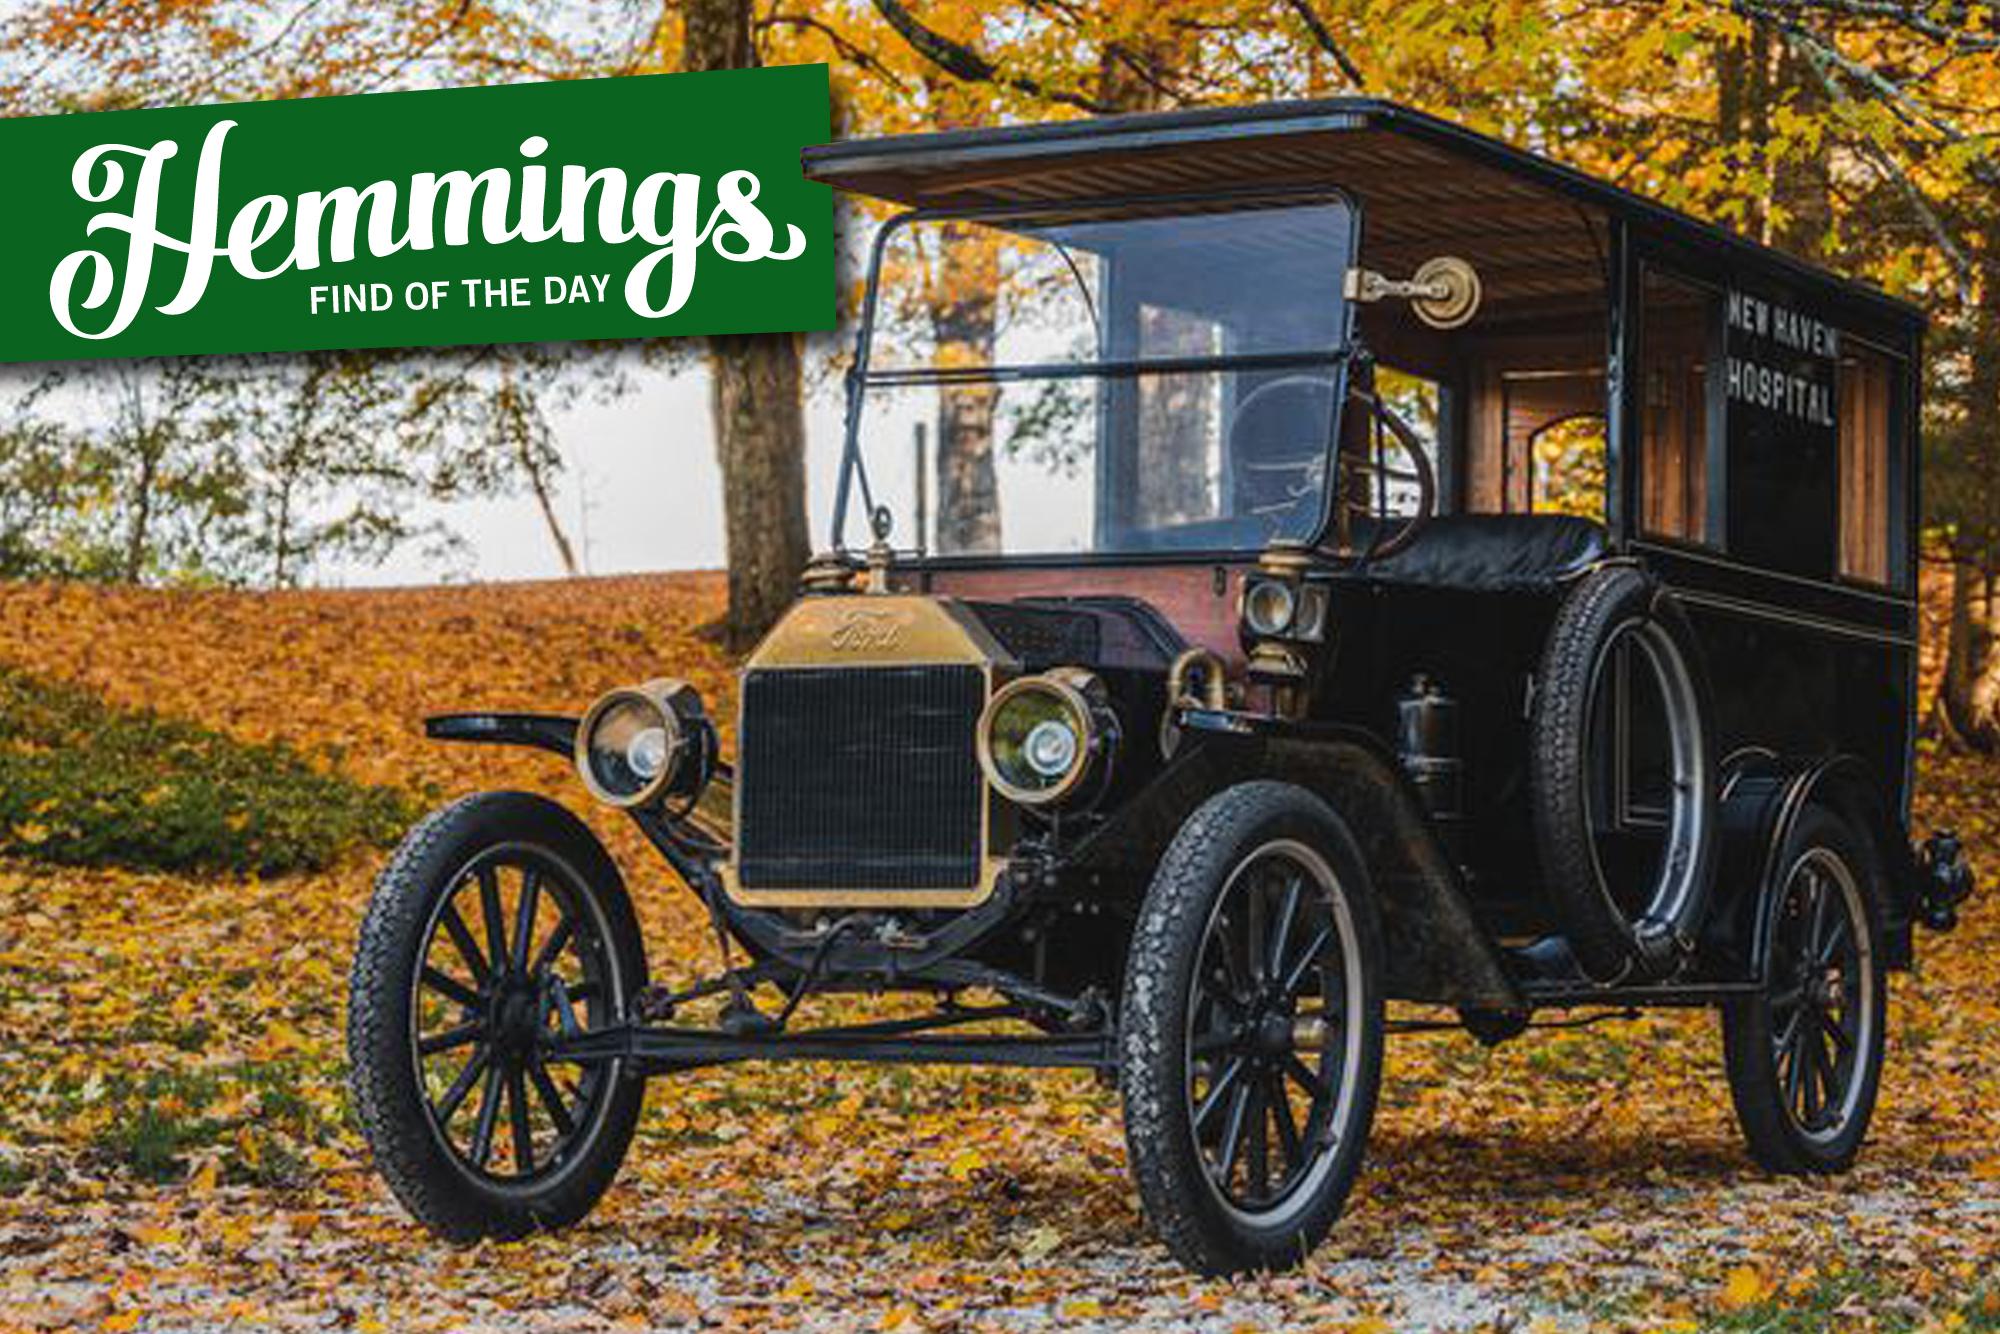 Restored 1914 Ford Model T replicates early motorized ambulance